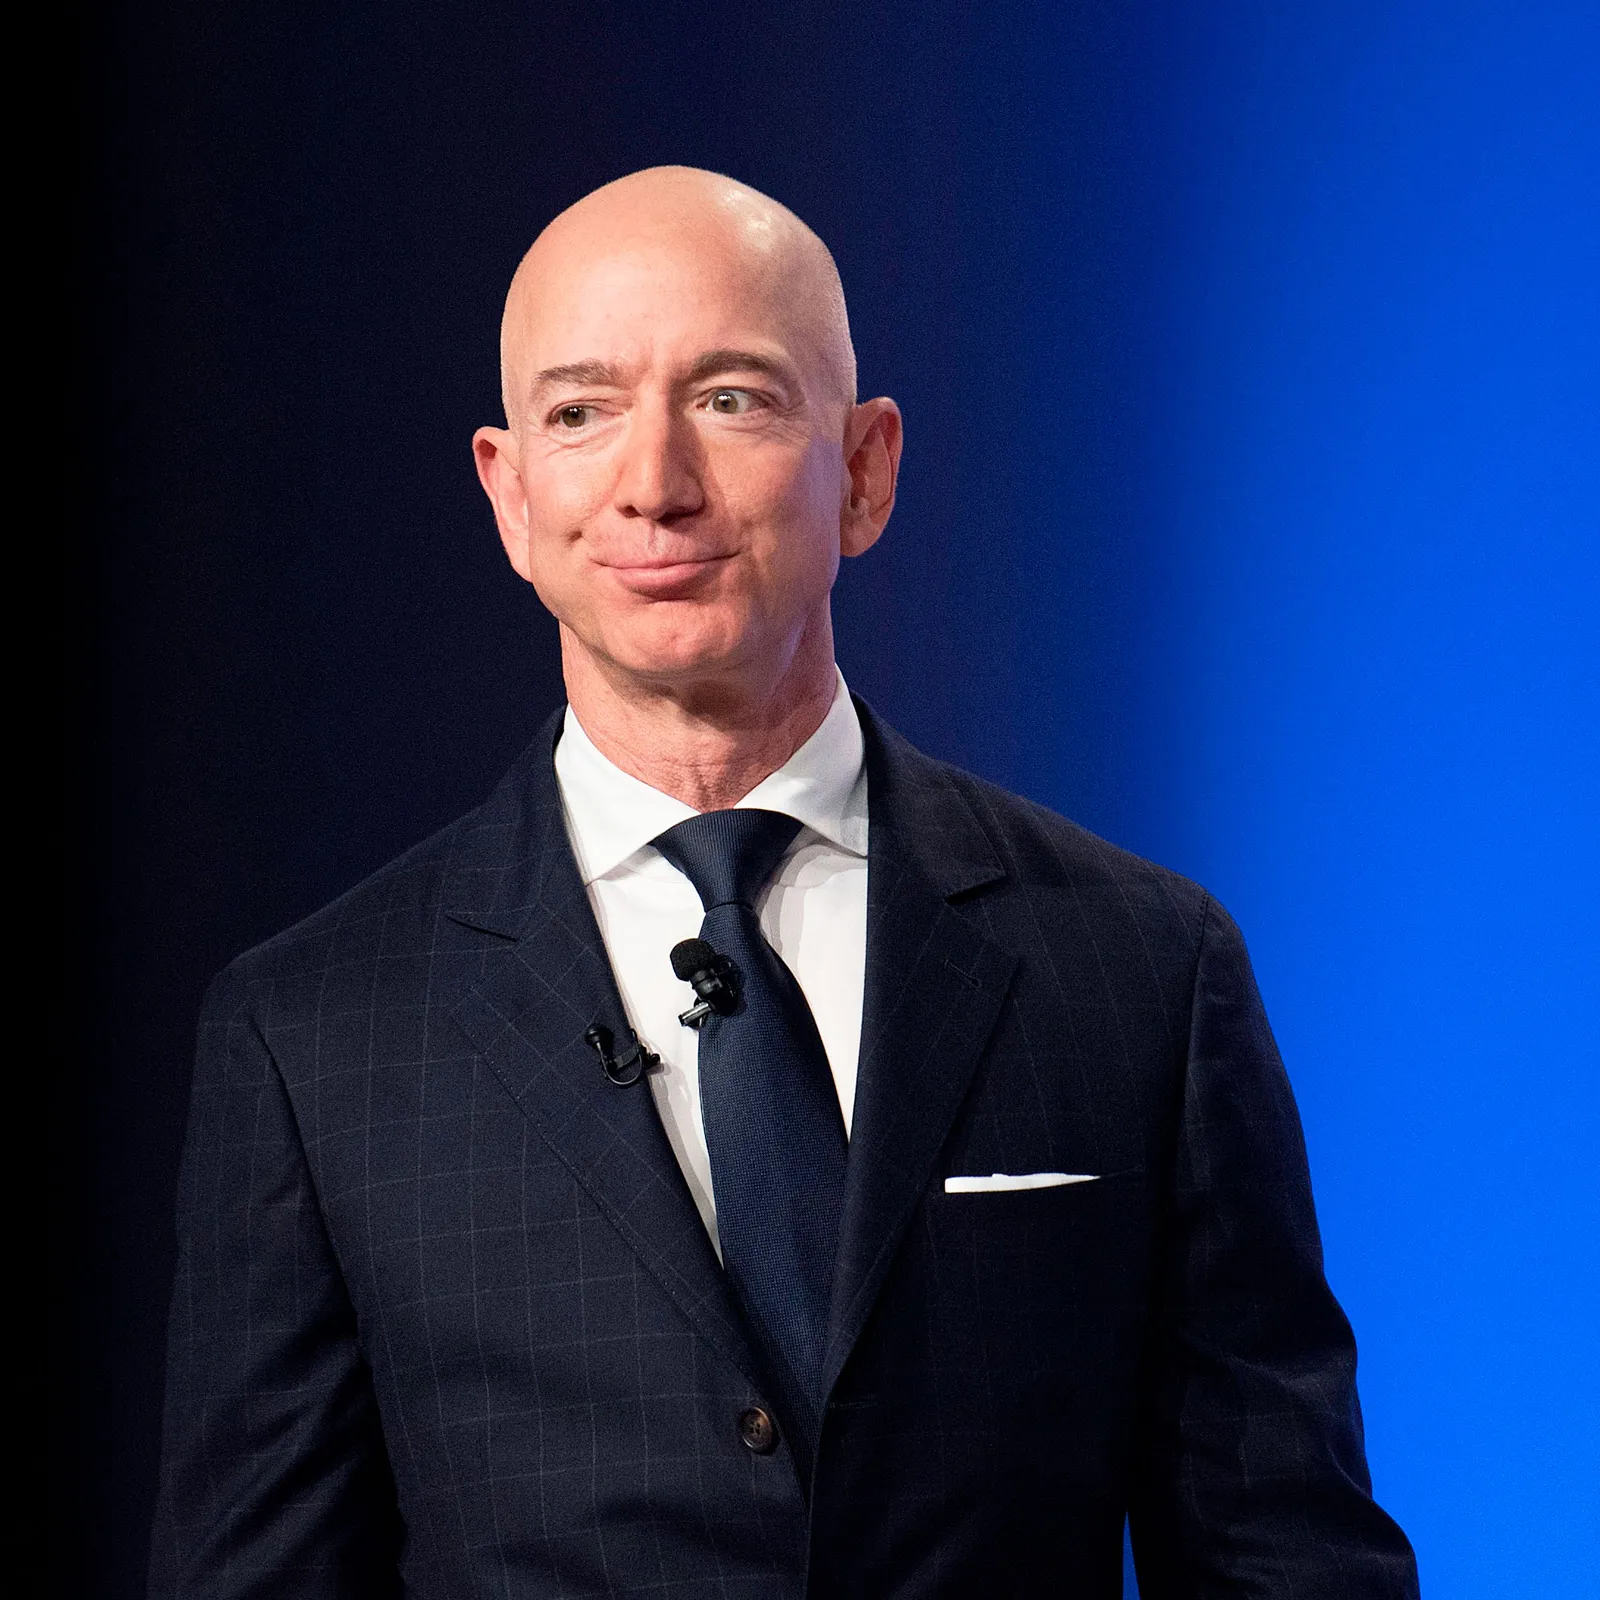 Jeff Bezos The Visionary Driving Amazon's Global Retail Dominance